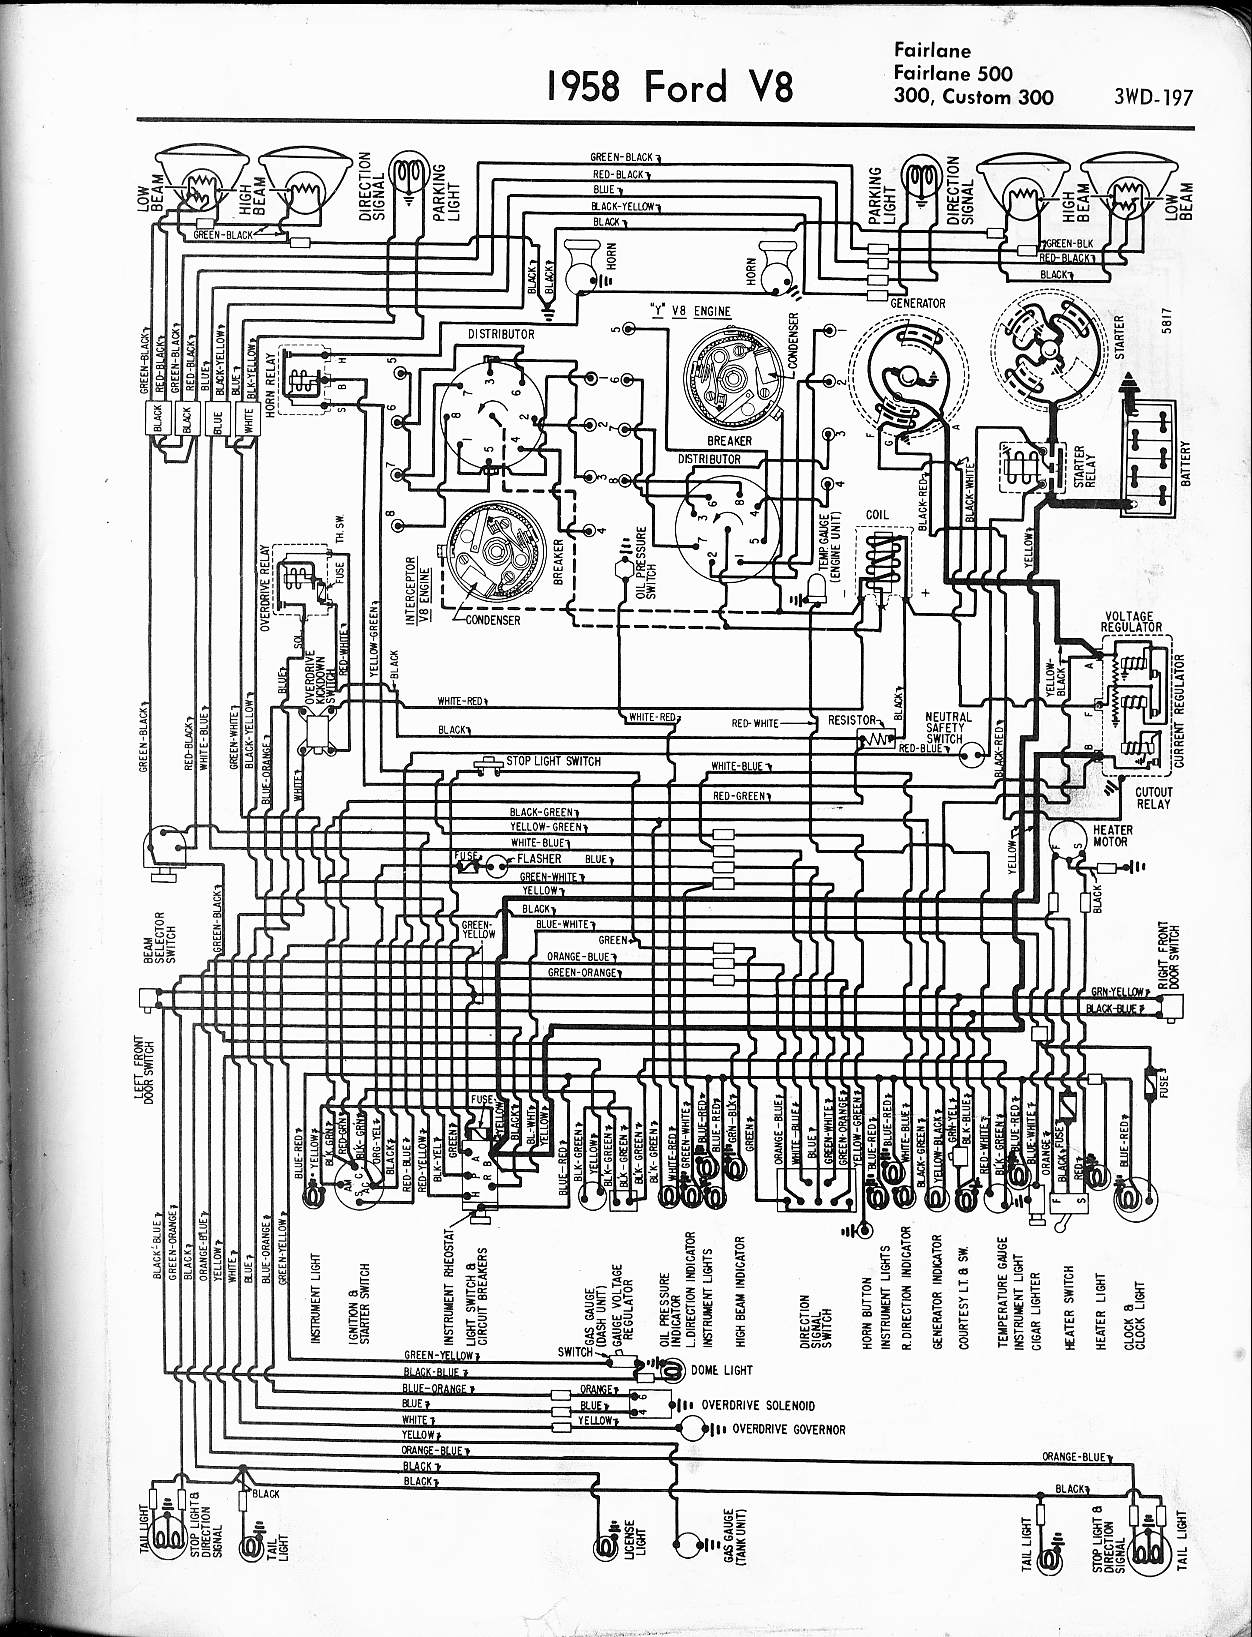 1966 Ford fairlane wiring diagram #3